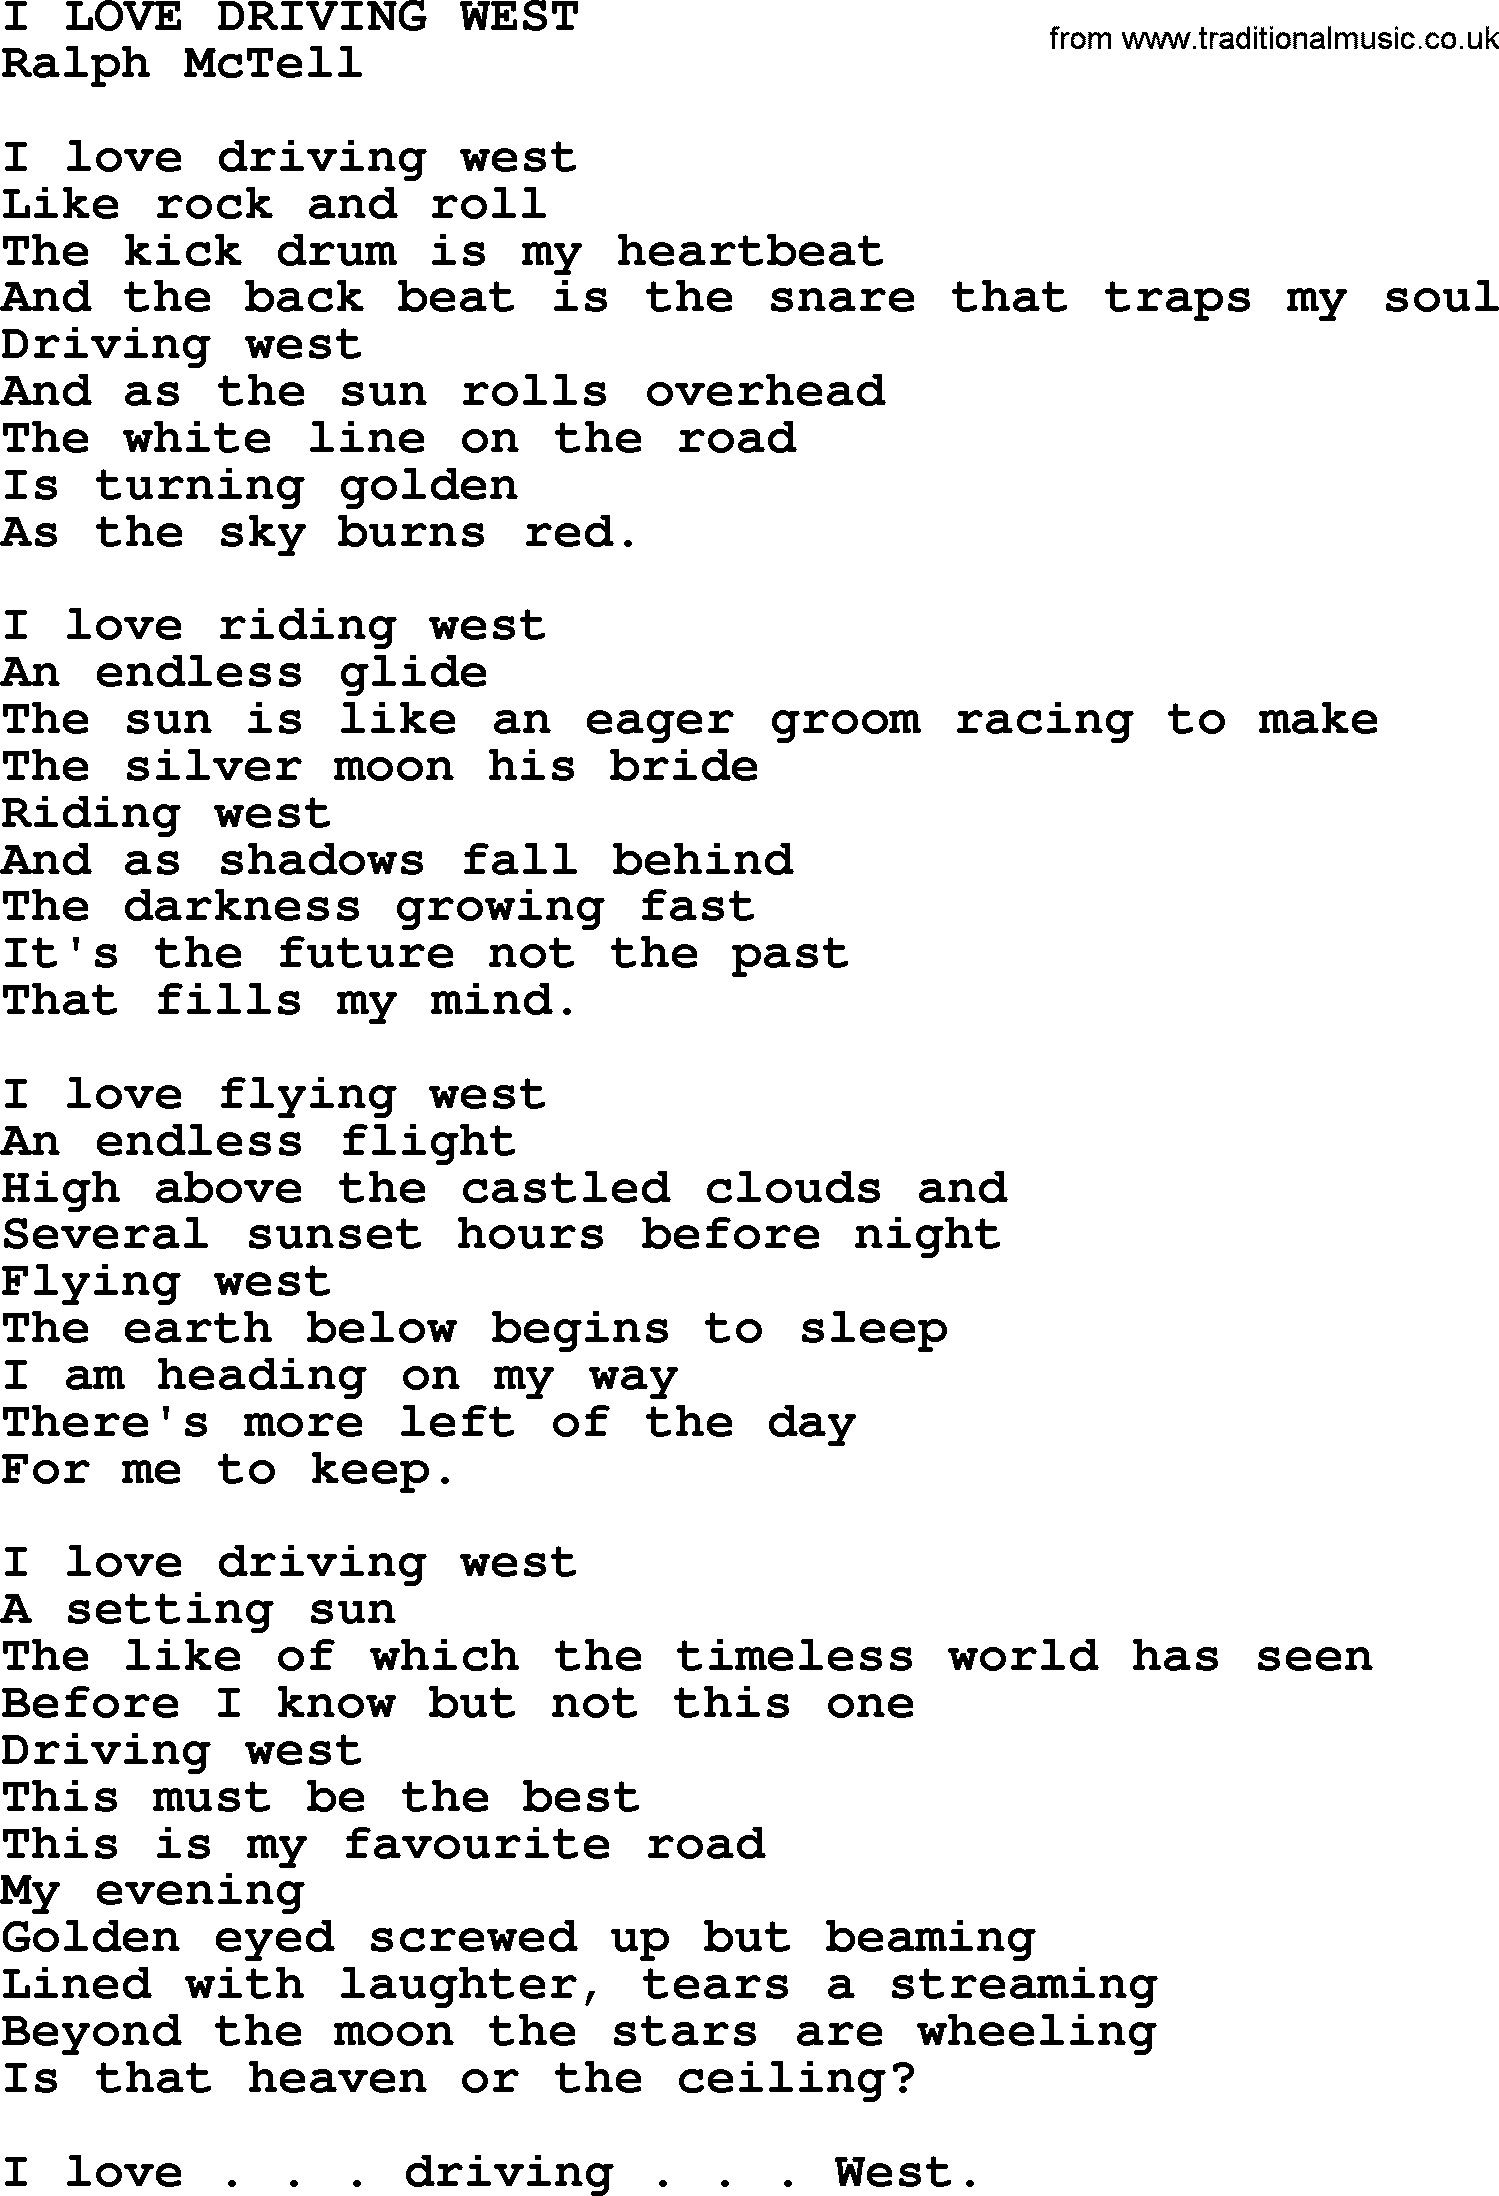 Ralph McTell Song: I Love Driving West, lyrics